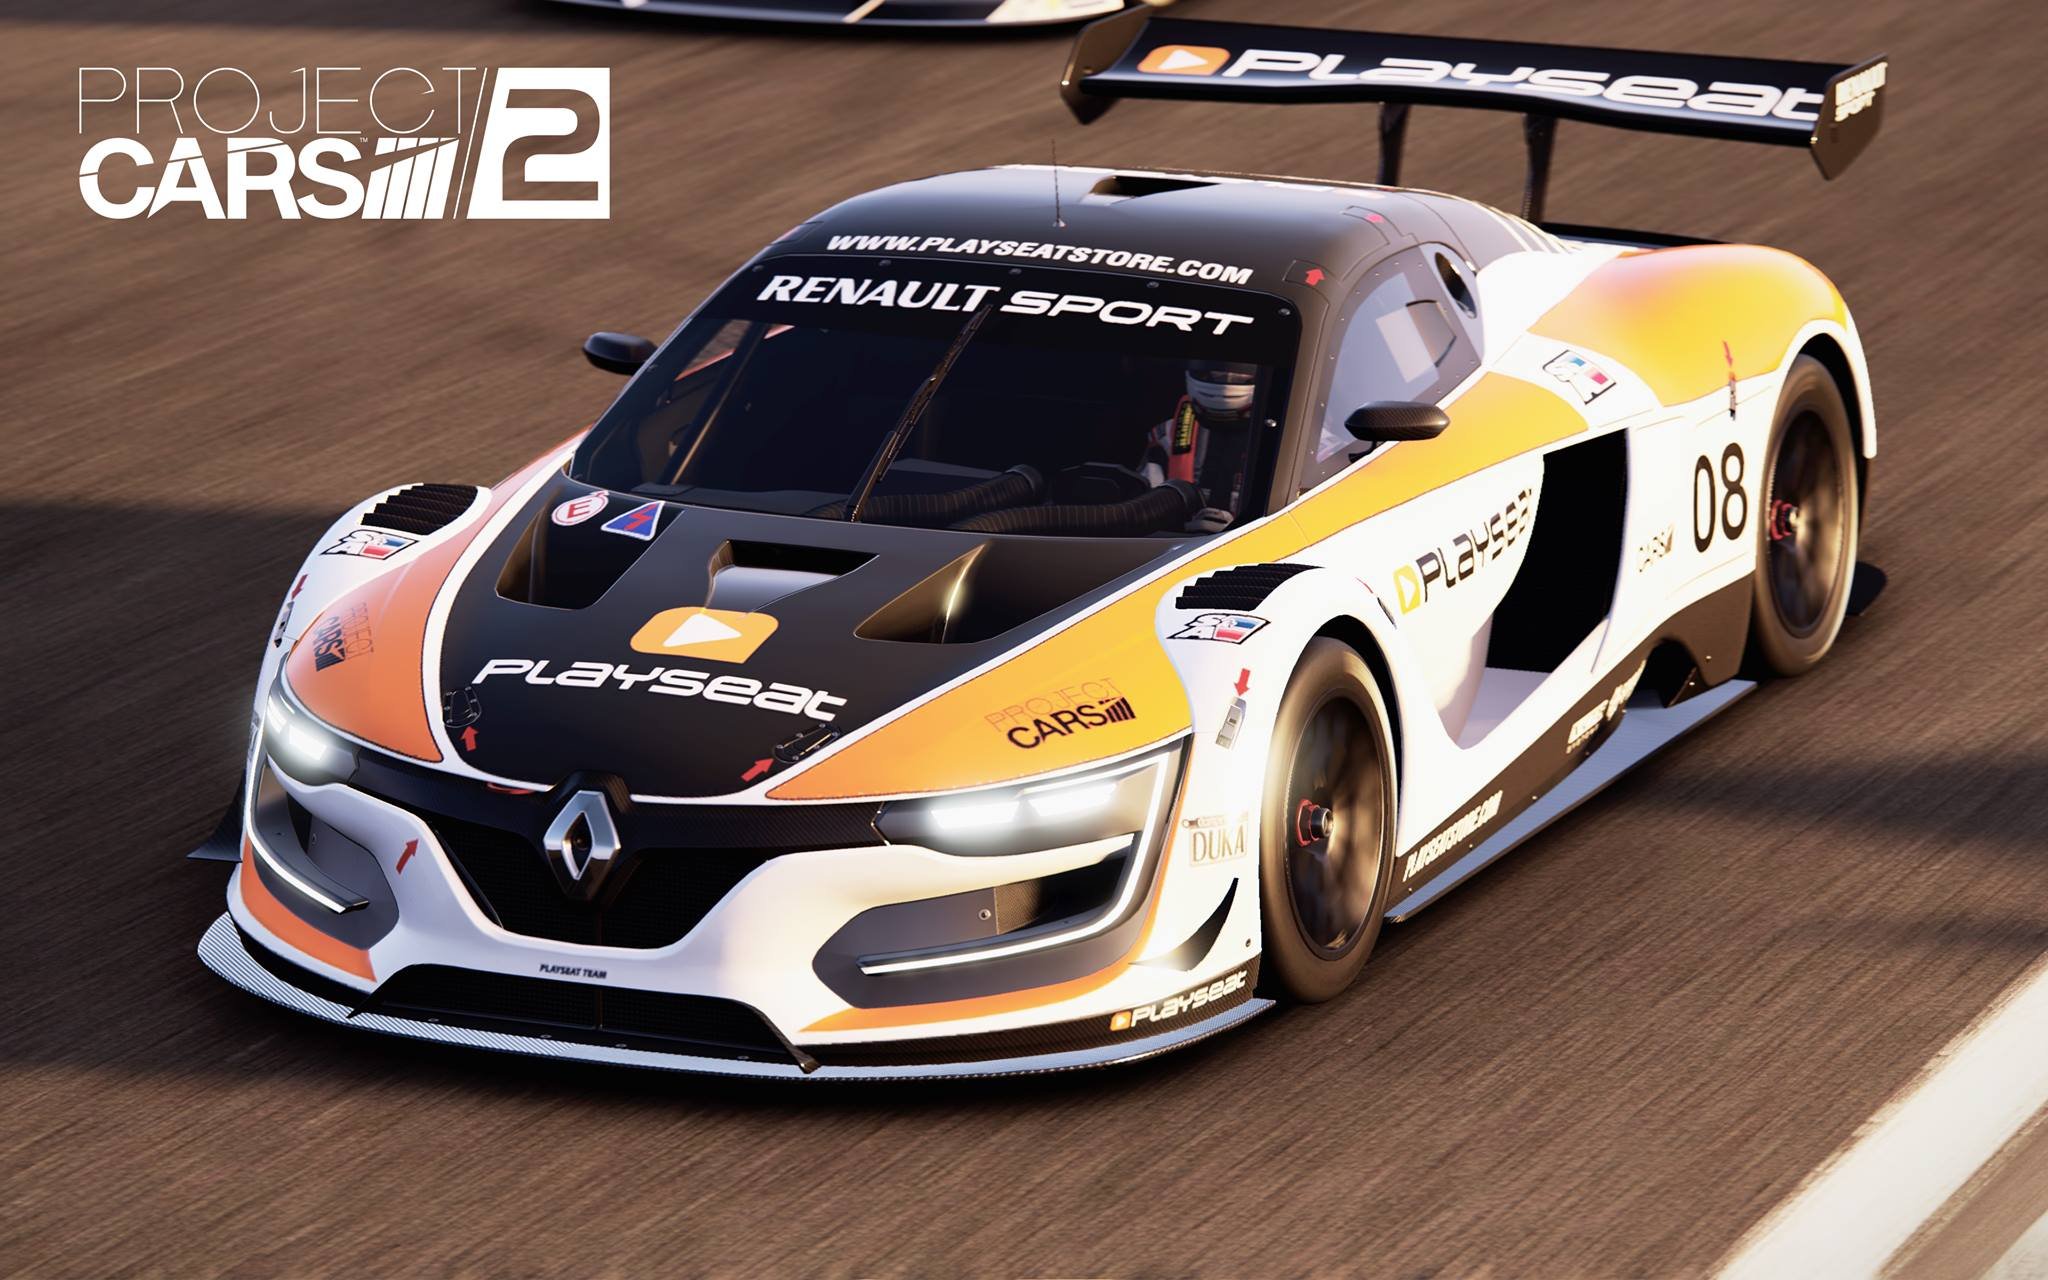 More information about "Lanciata la Renault Esports Series con Project CARS 2"